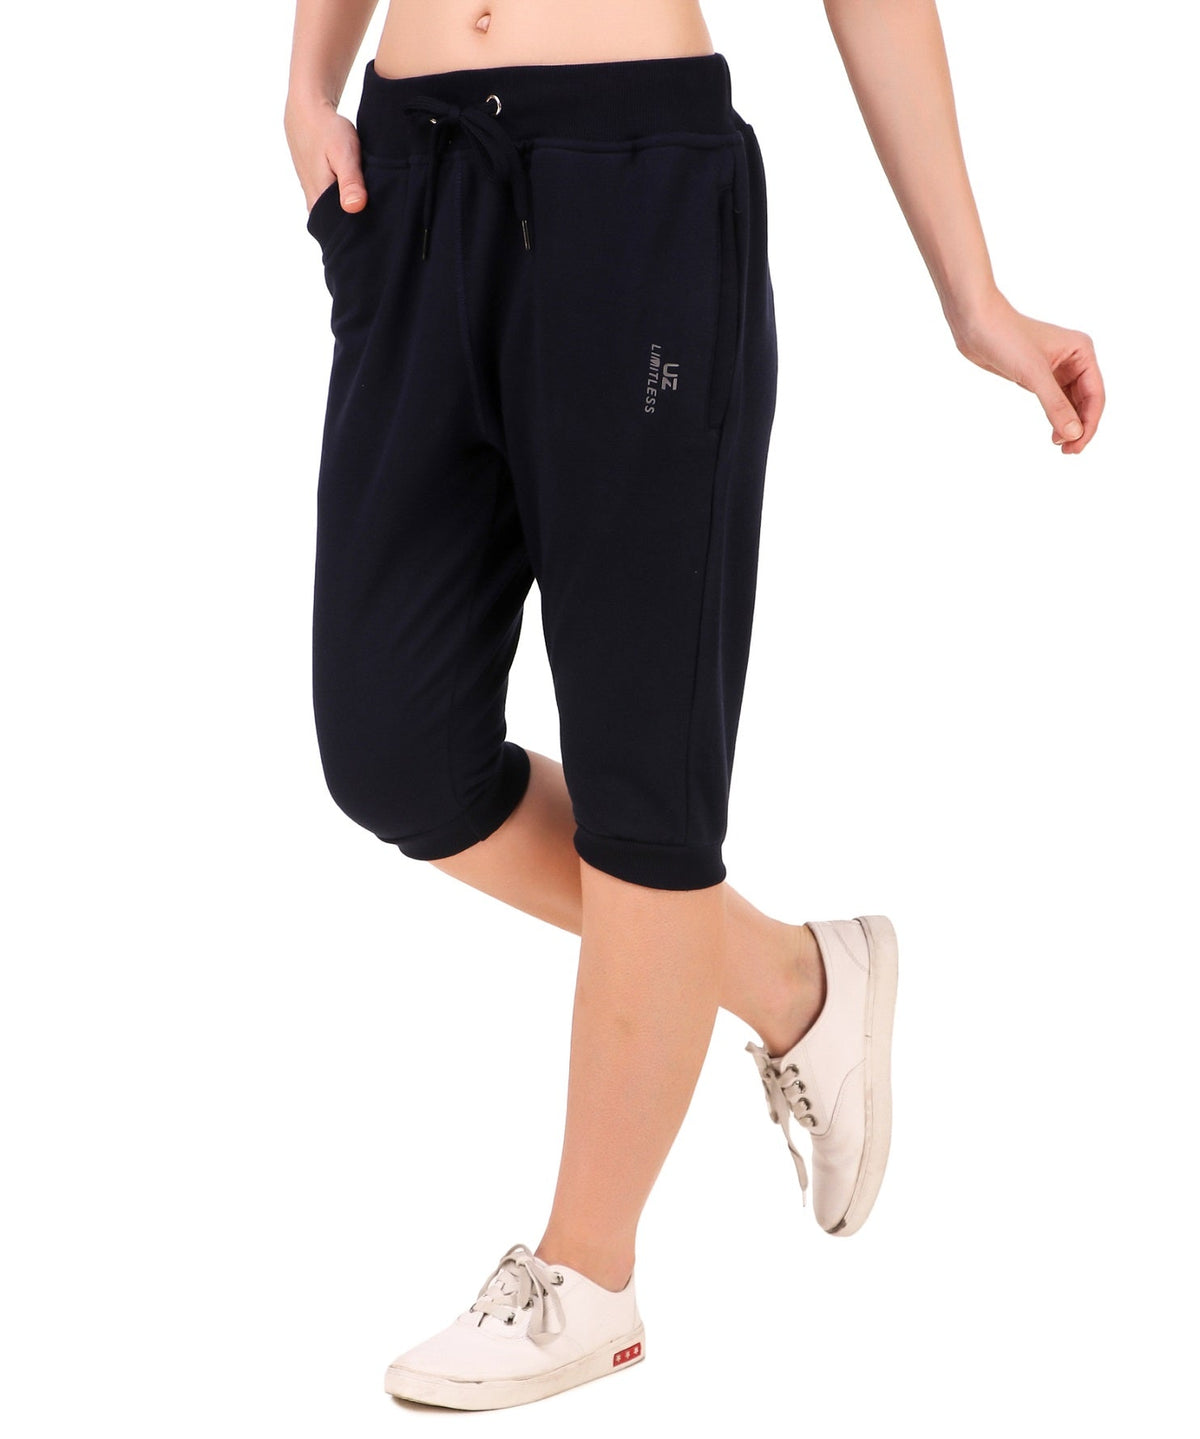 Hifzaa womens cotton capri 34 pants for women pajama with pockets Sizes M  to 6XL